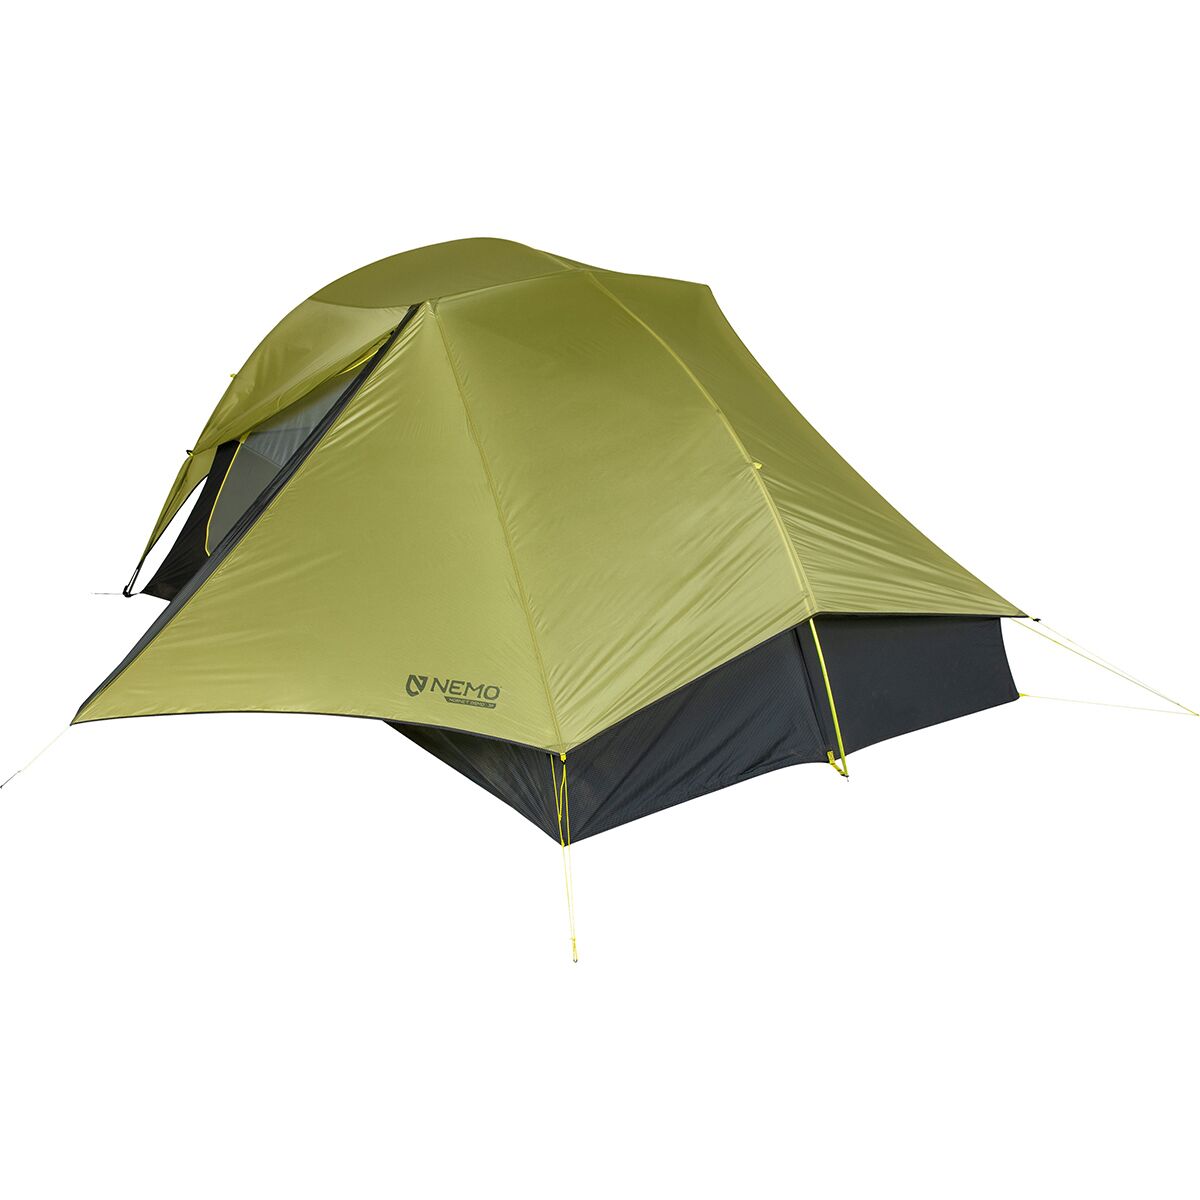 NEMO Equipment Inc. Hornet OSMO Tent : 3-Person 3-Season